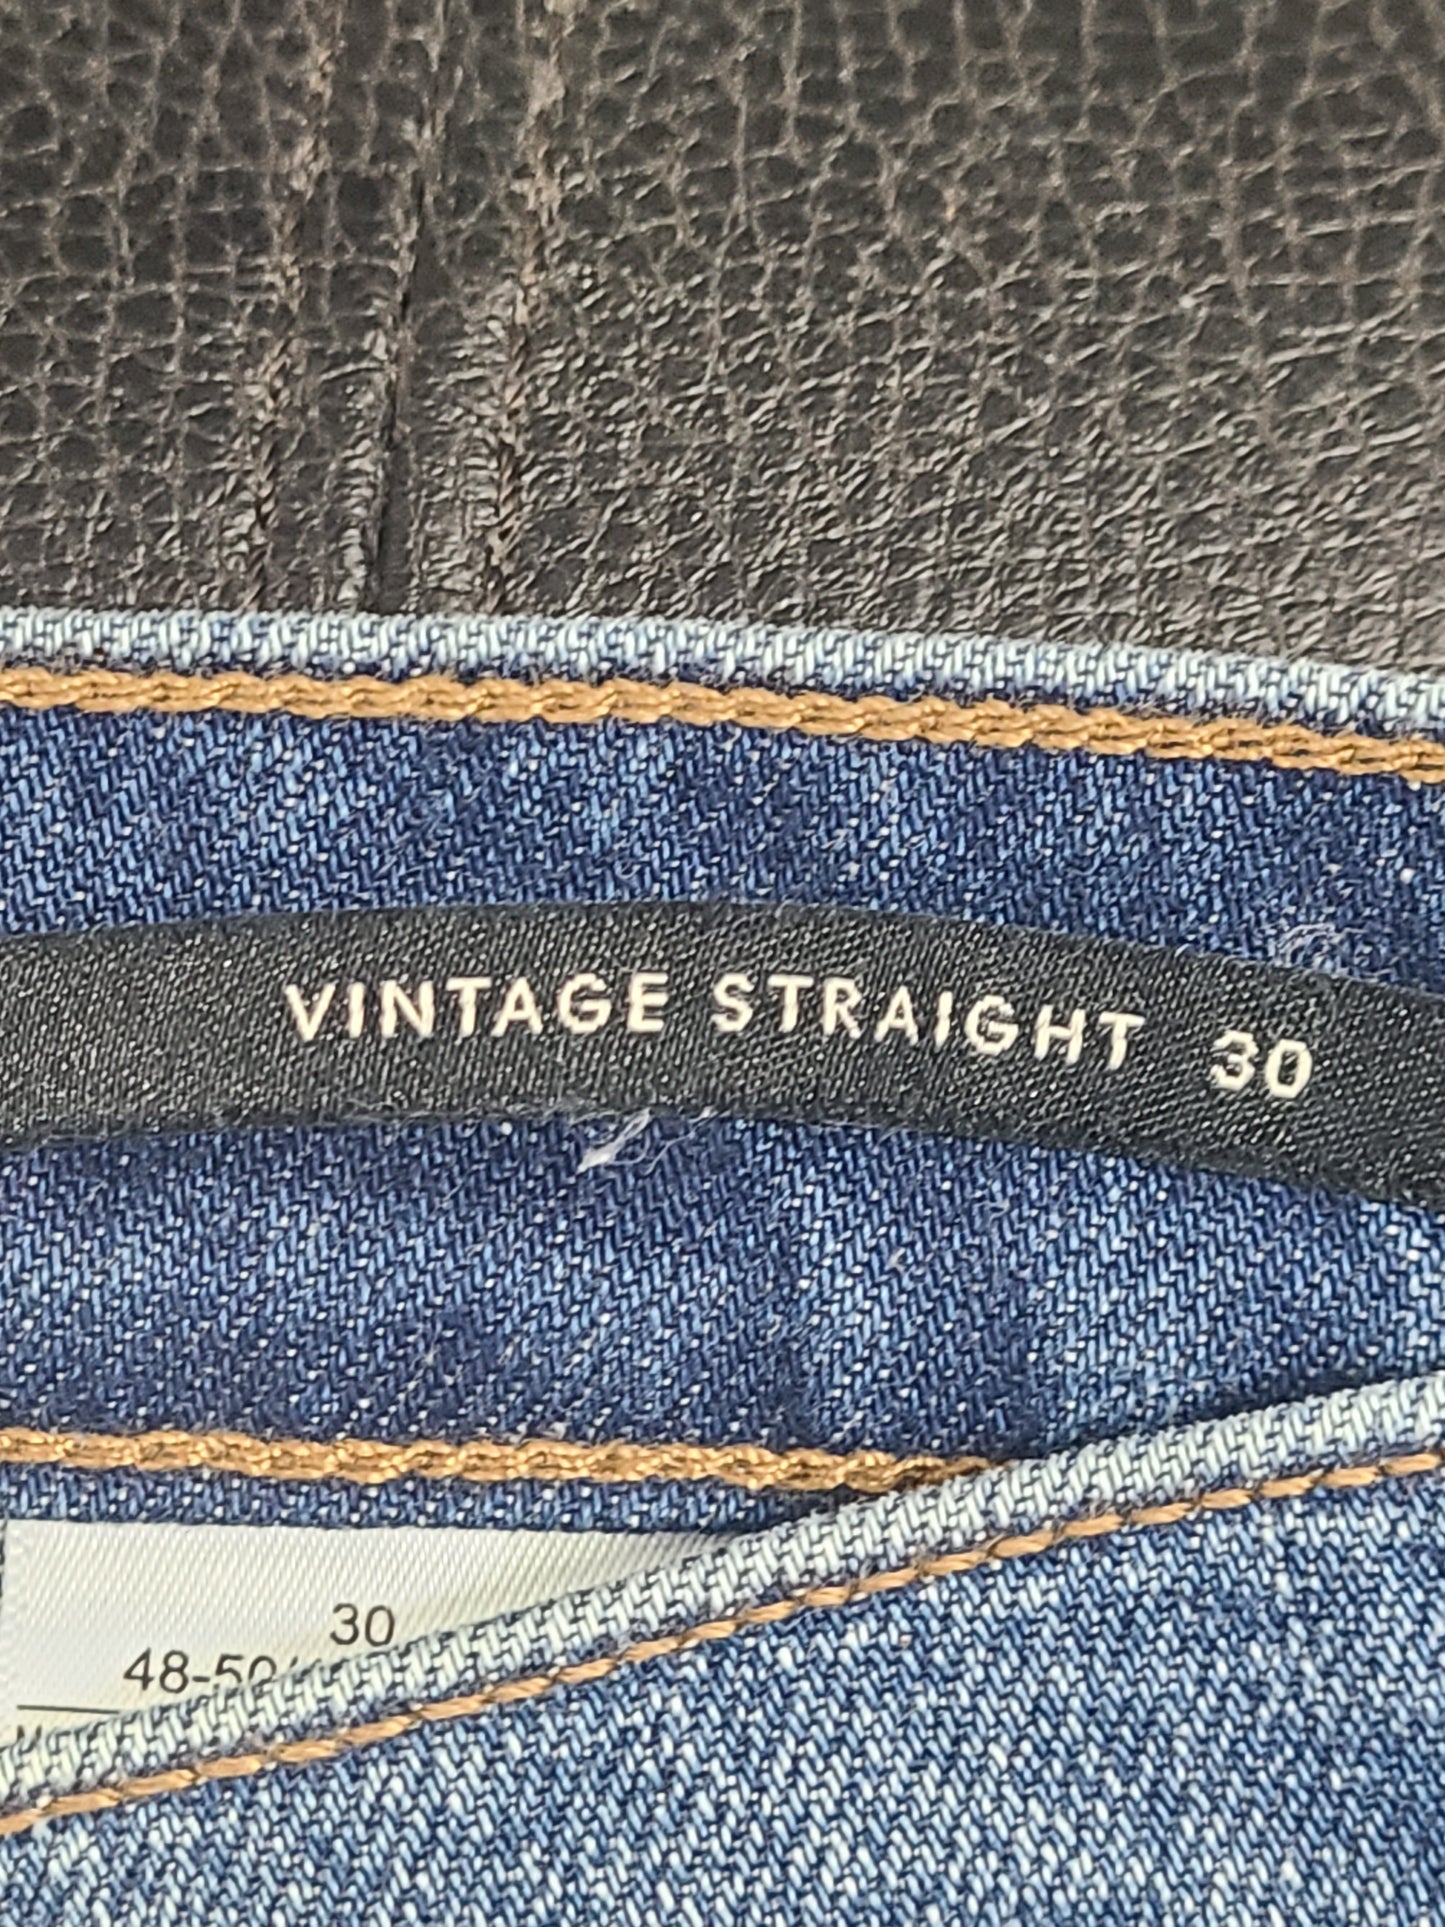 Banana Republic Premium Denim Vintage Straight Women's Jeans Blue - Size 30